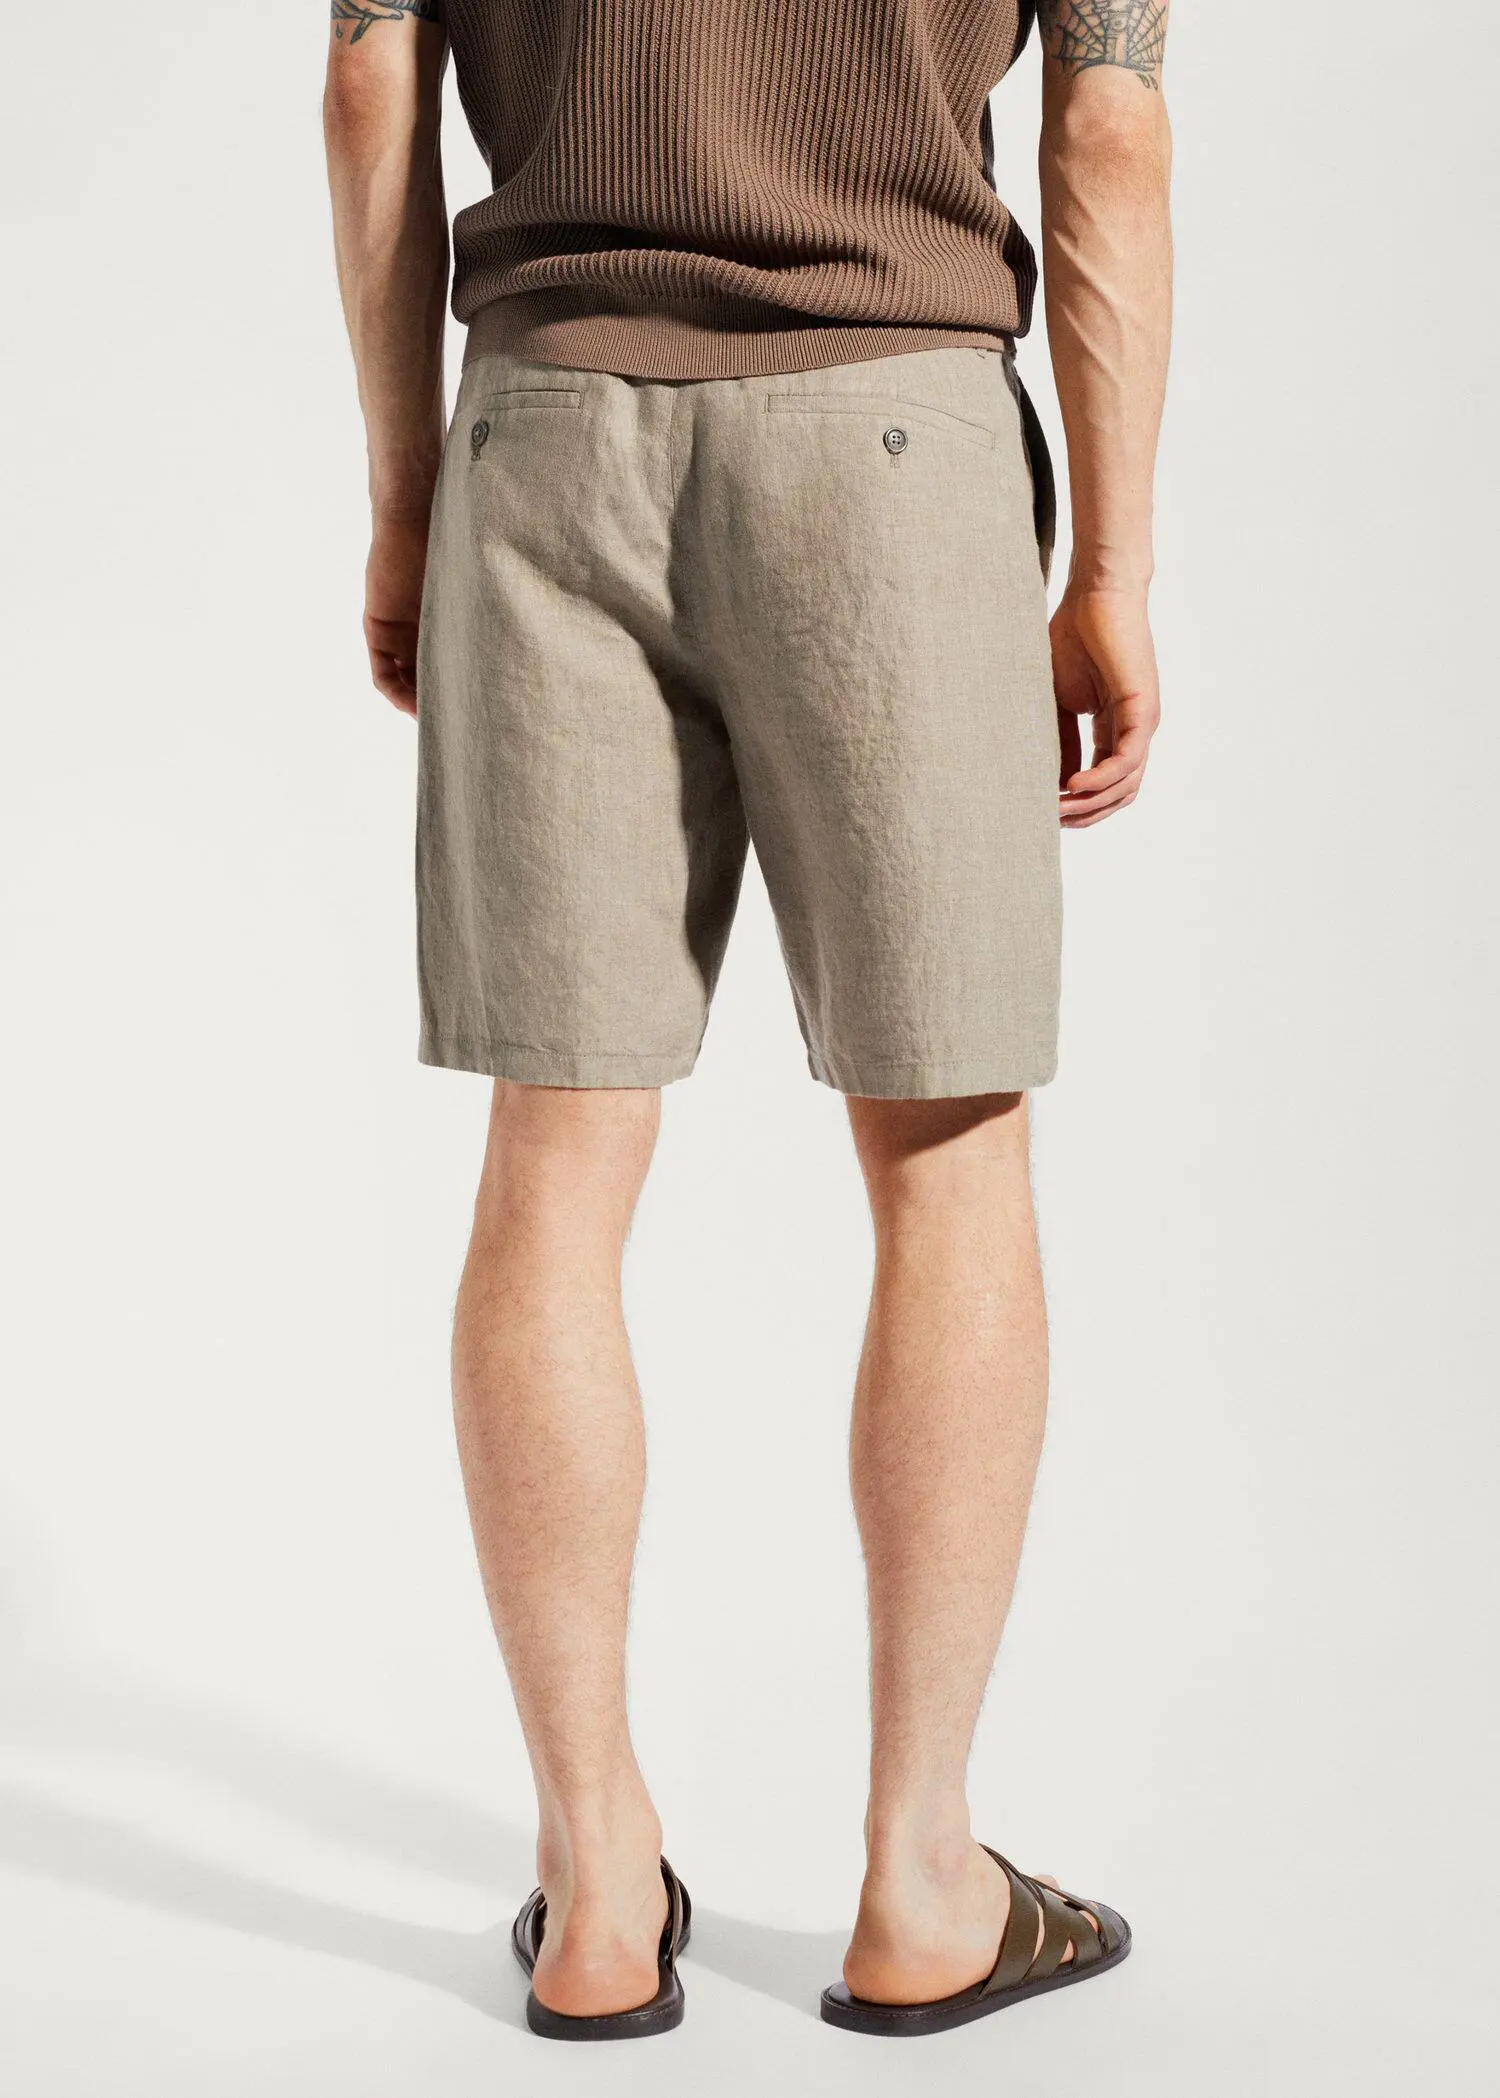 Mango 100% linen shorts. a man wearing a pair of khaki colored shorts. 